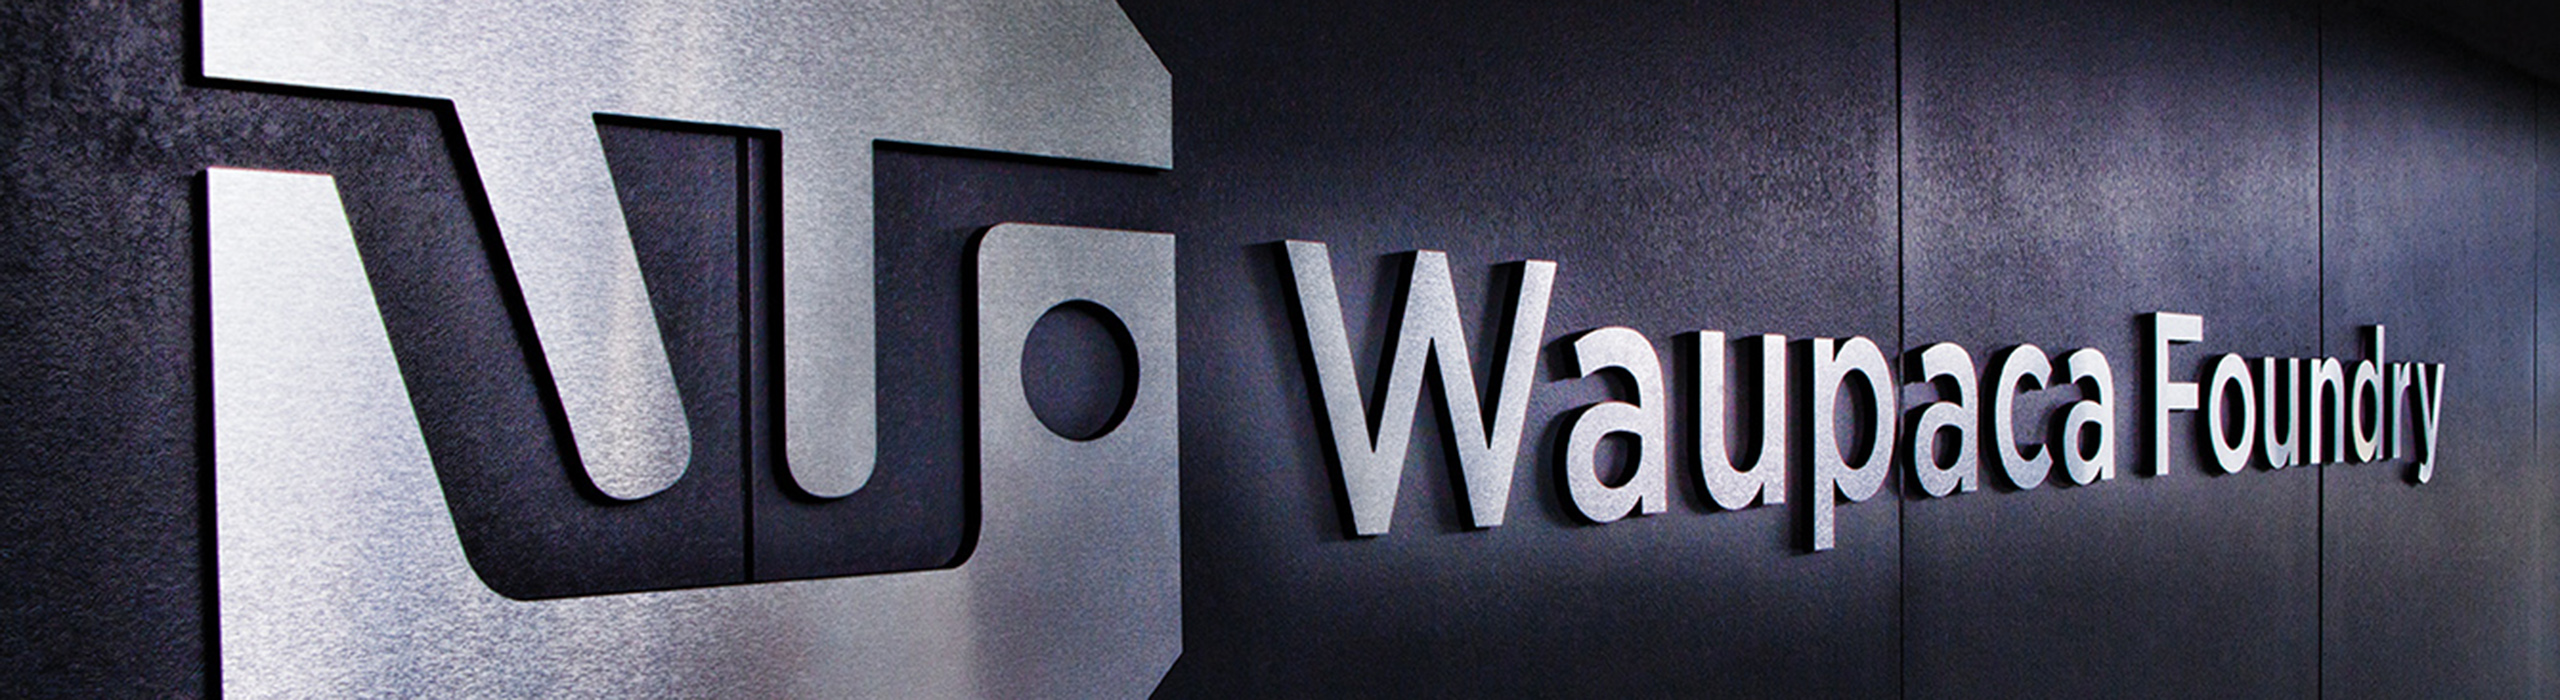 Waupaca Foundry logo on wall